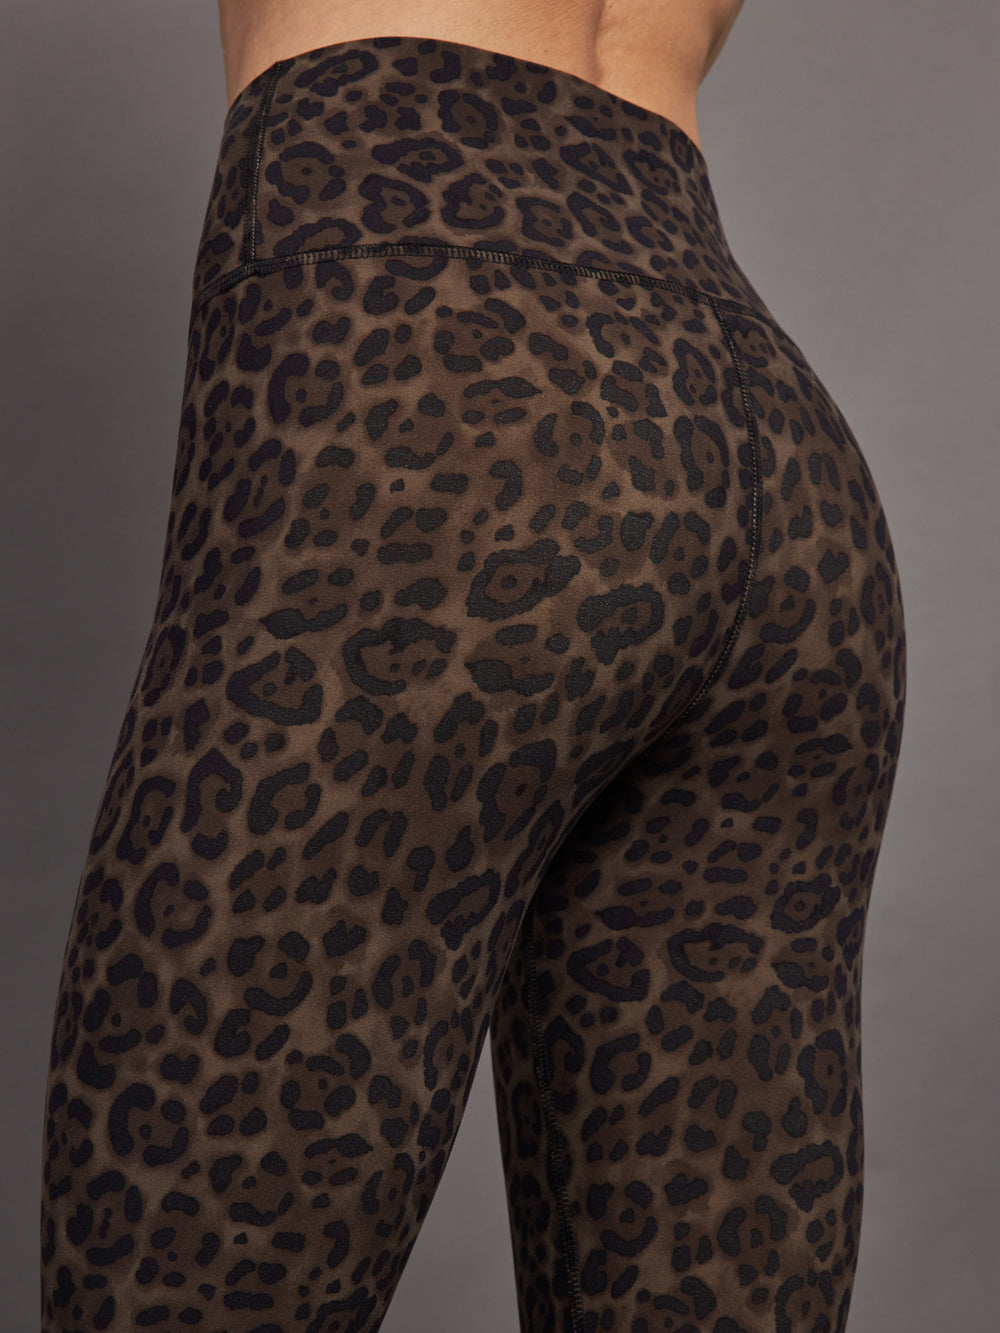 Lane Bryant Leopard Legging G/H Melancholy Leopard